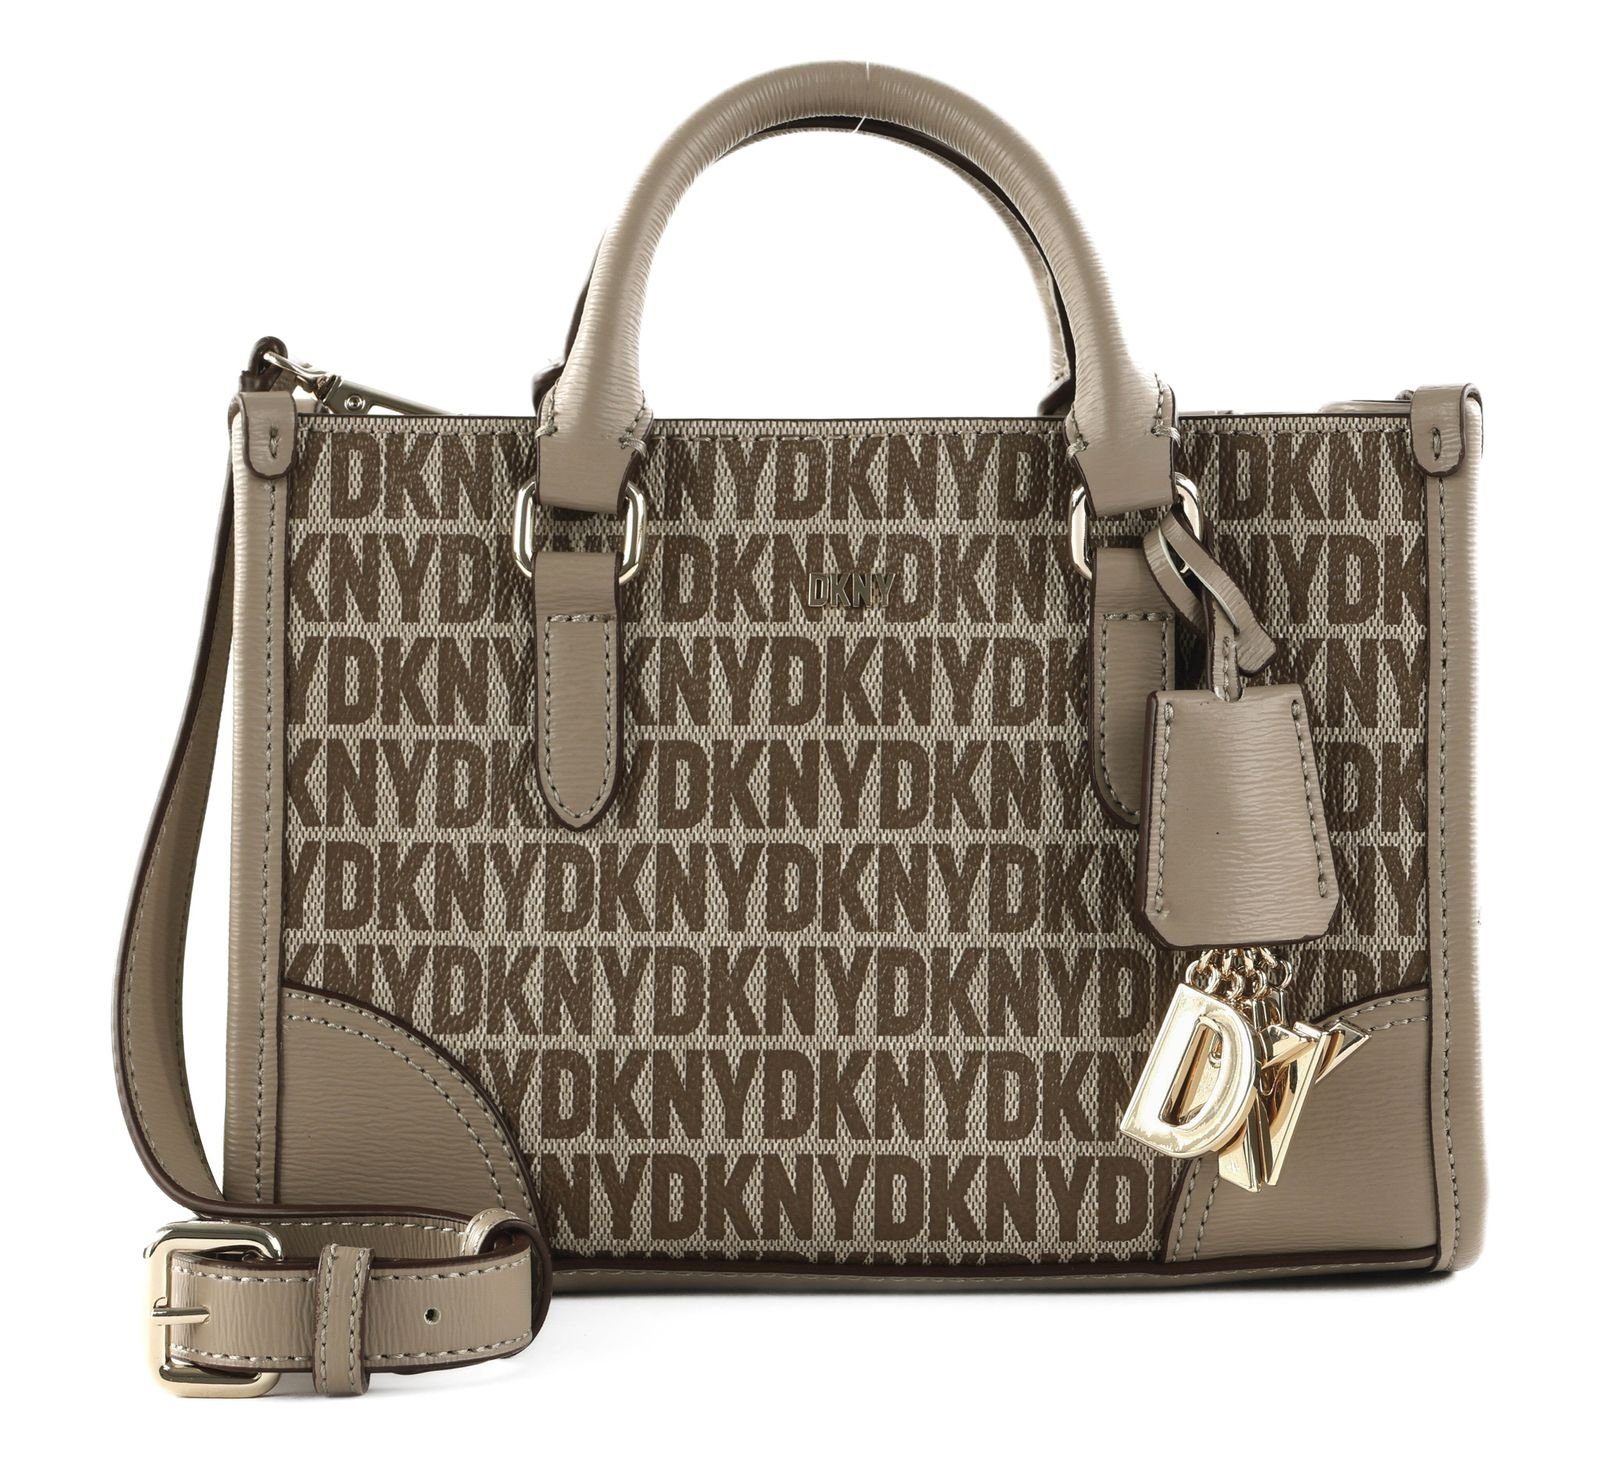 DKNY Handtasche Perri Chino / Toffee | Handtaschen